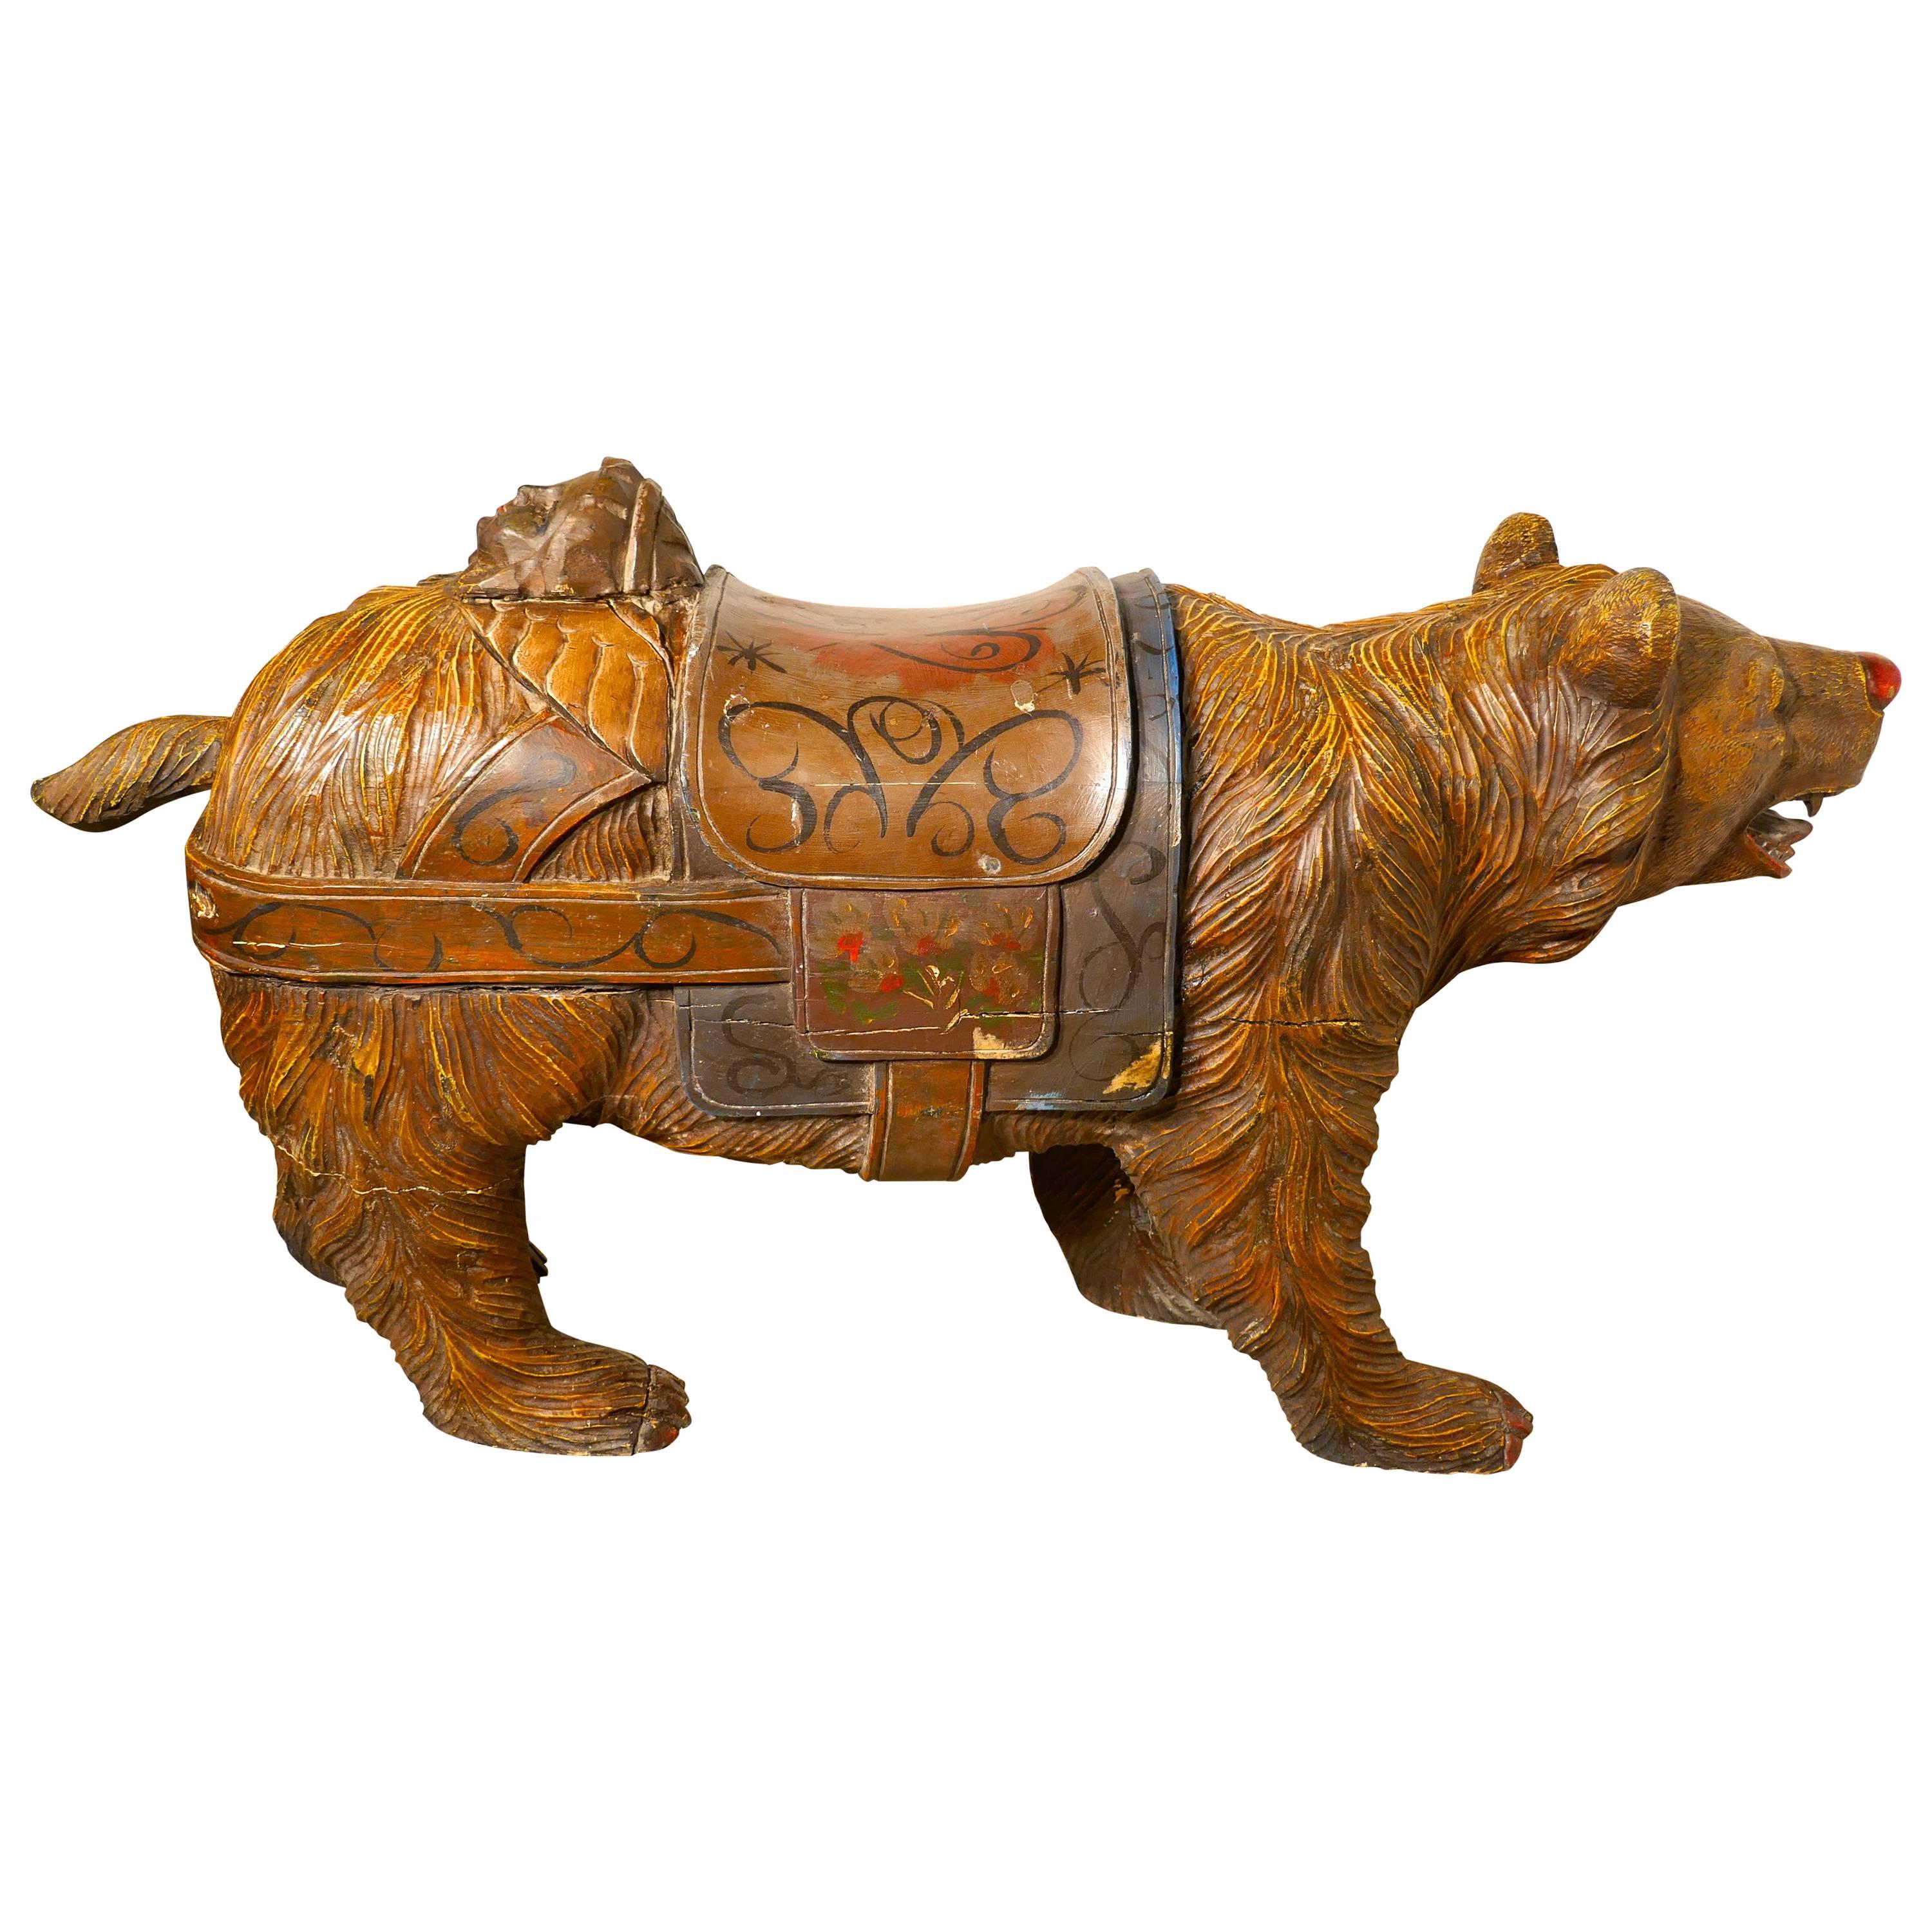 19th Century Carved Wooden Bear, German Fair Ground Galloper